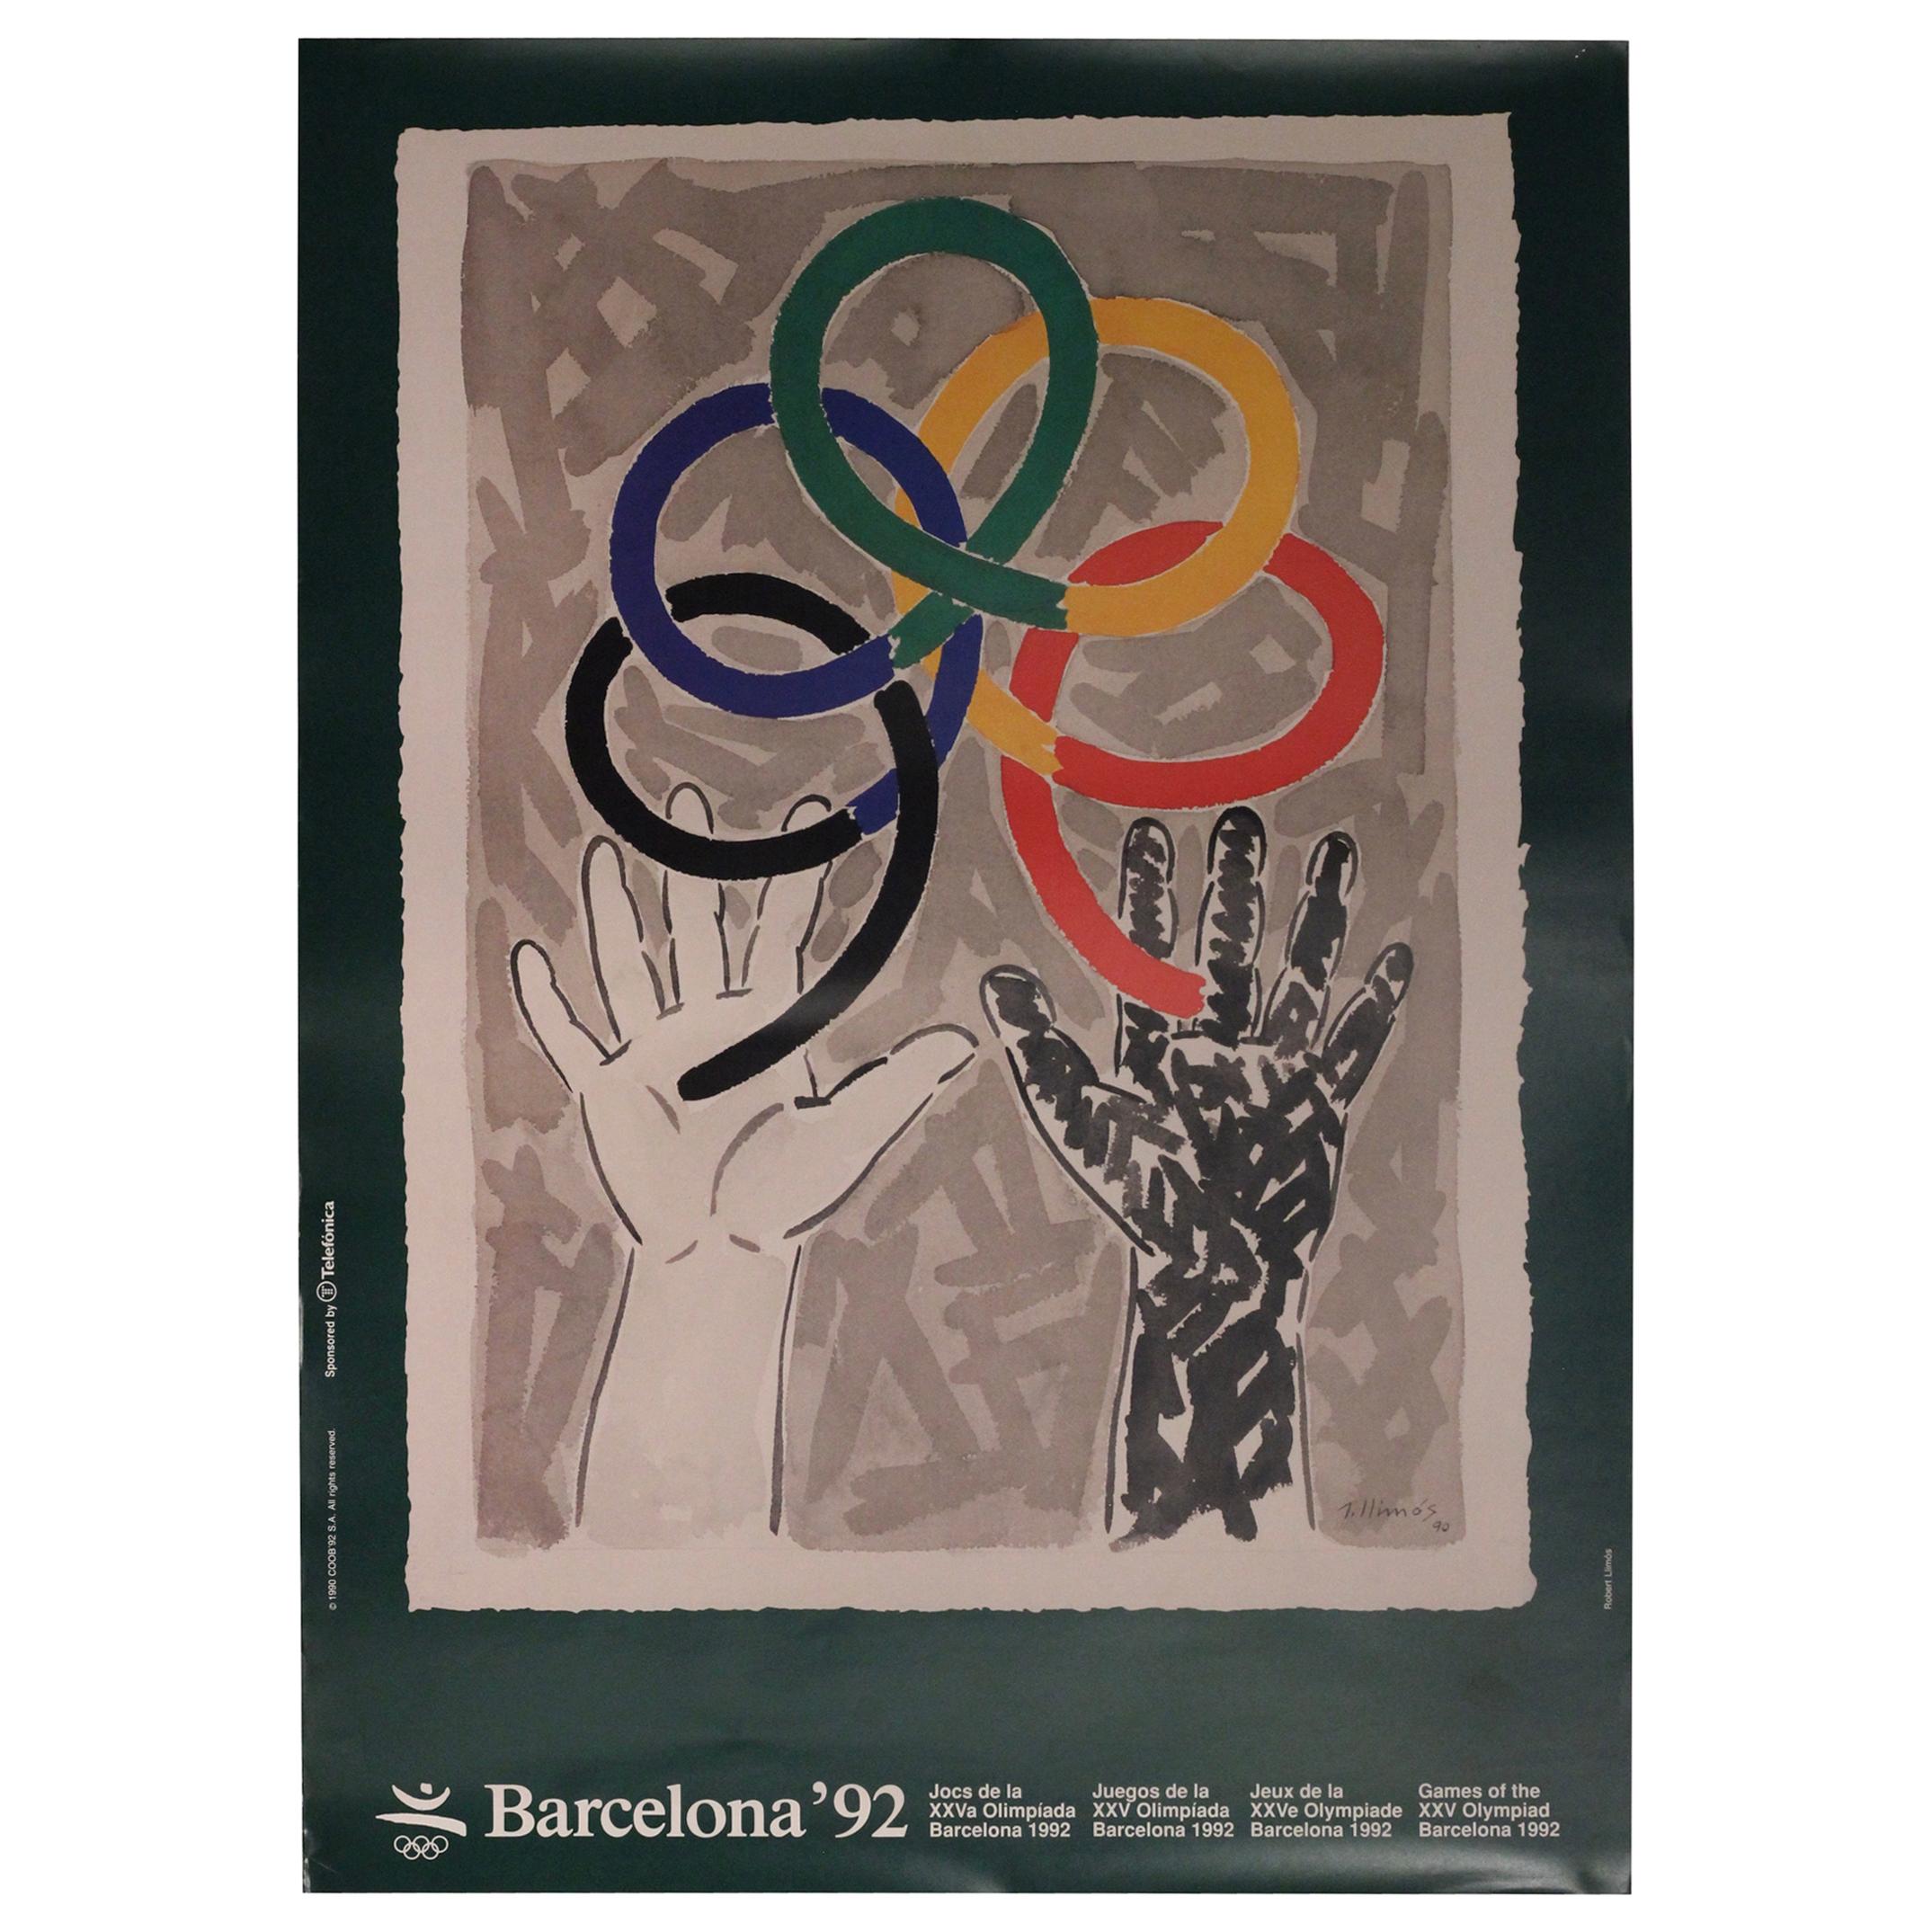 Barcelona Summer Olympic Poster 1992 by Artist Robert Llimós for the Xxv Games